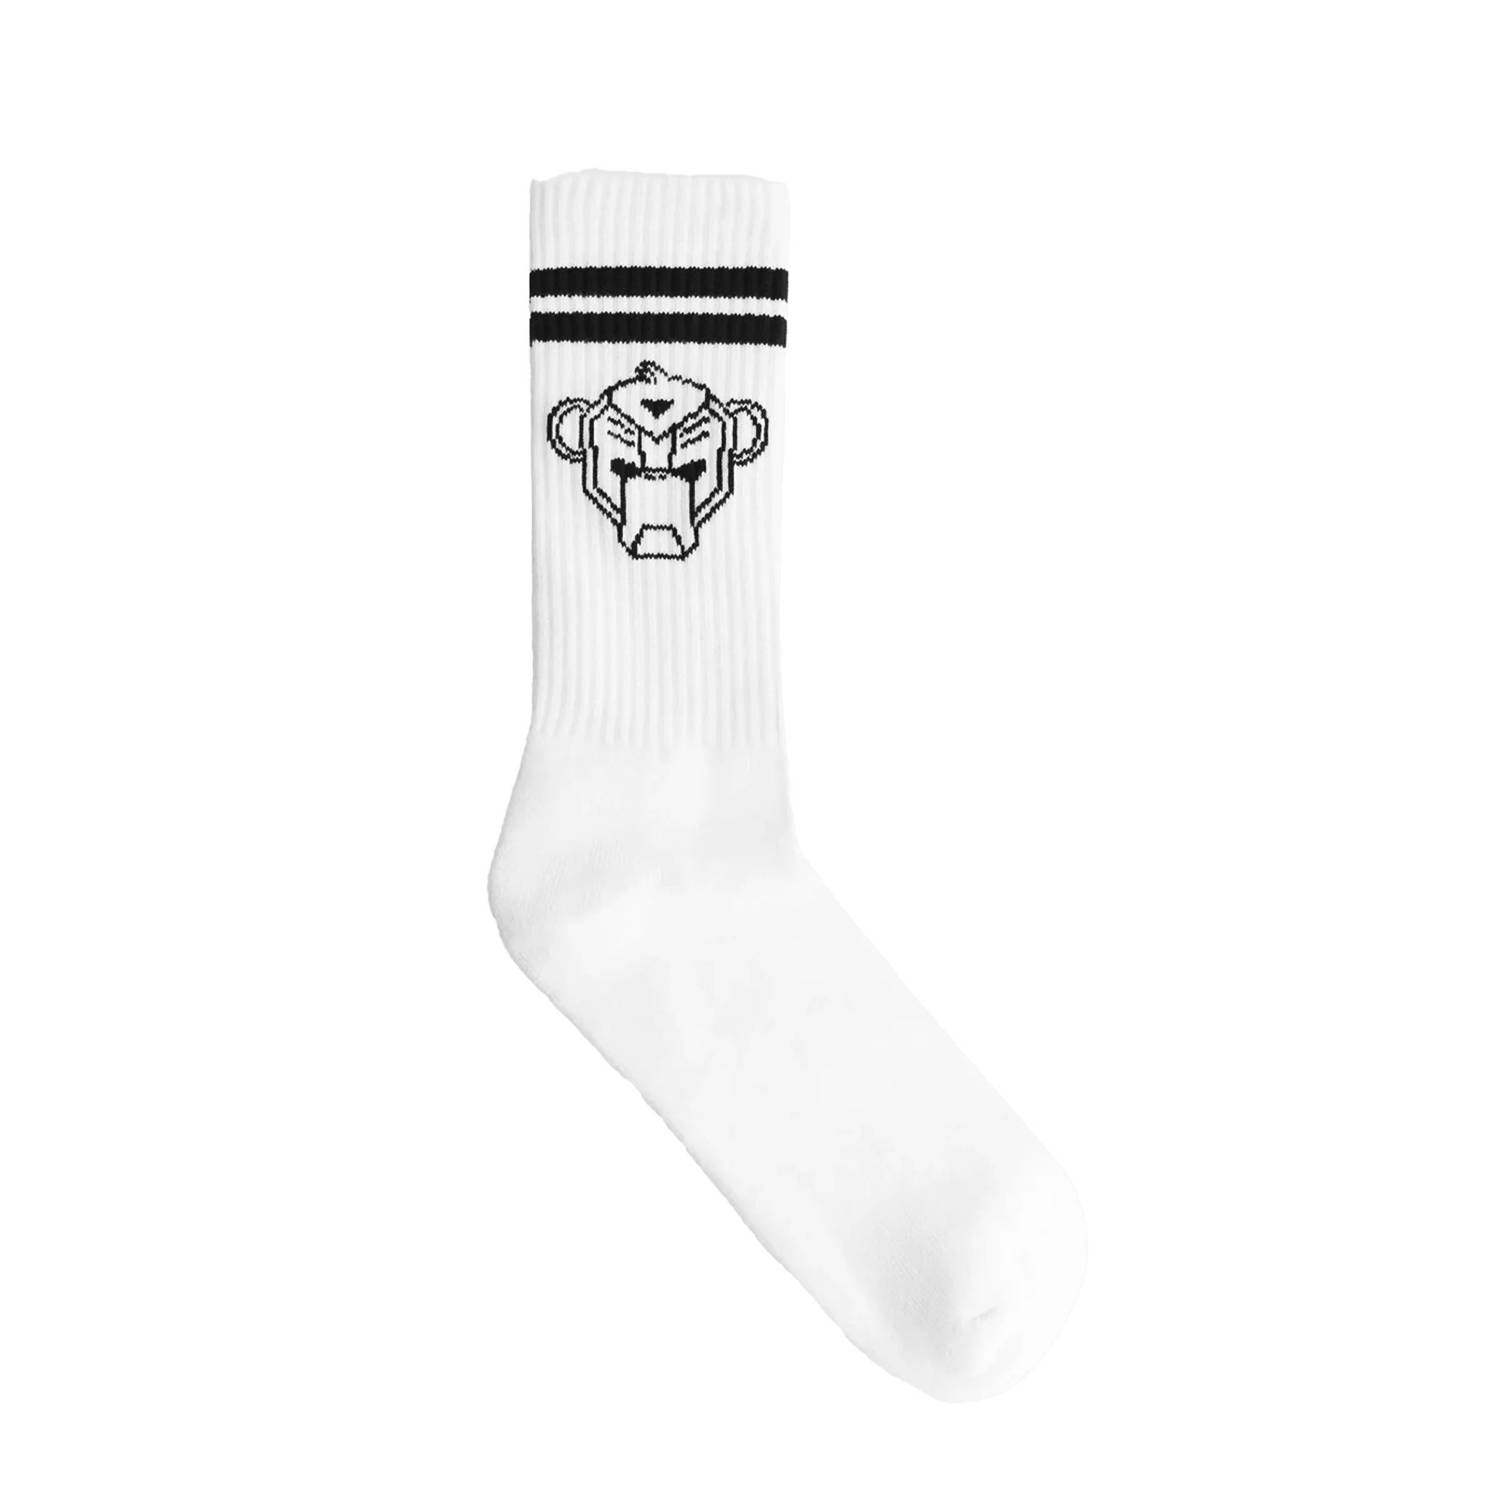 BLACK BANANAS sokken met logo wit zwart